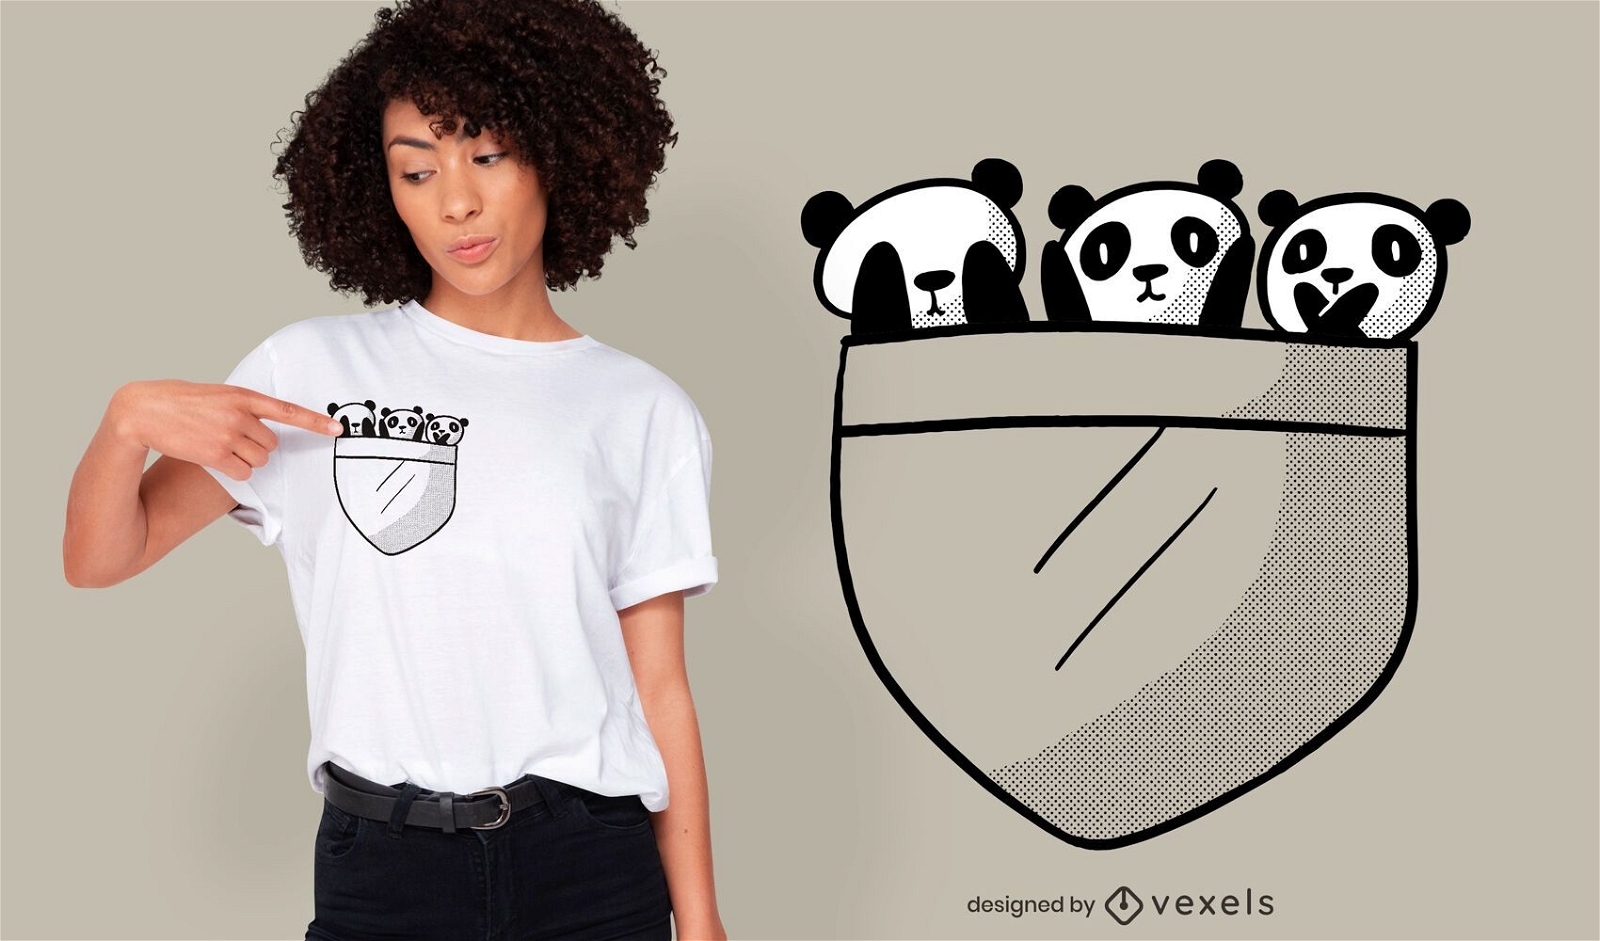 Panda pocket t-shirt design